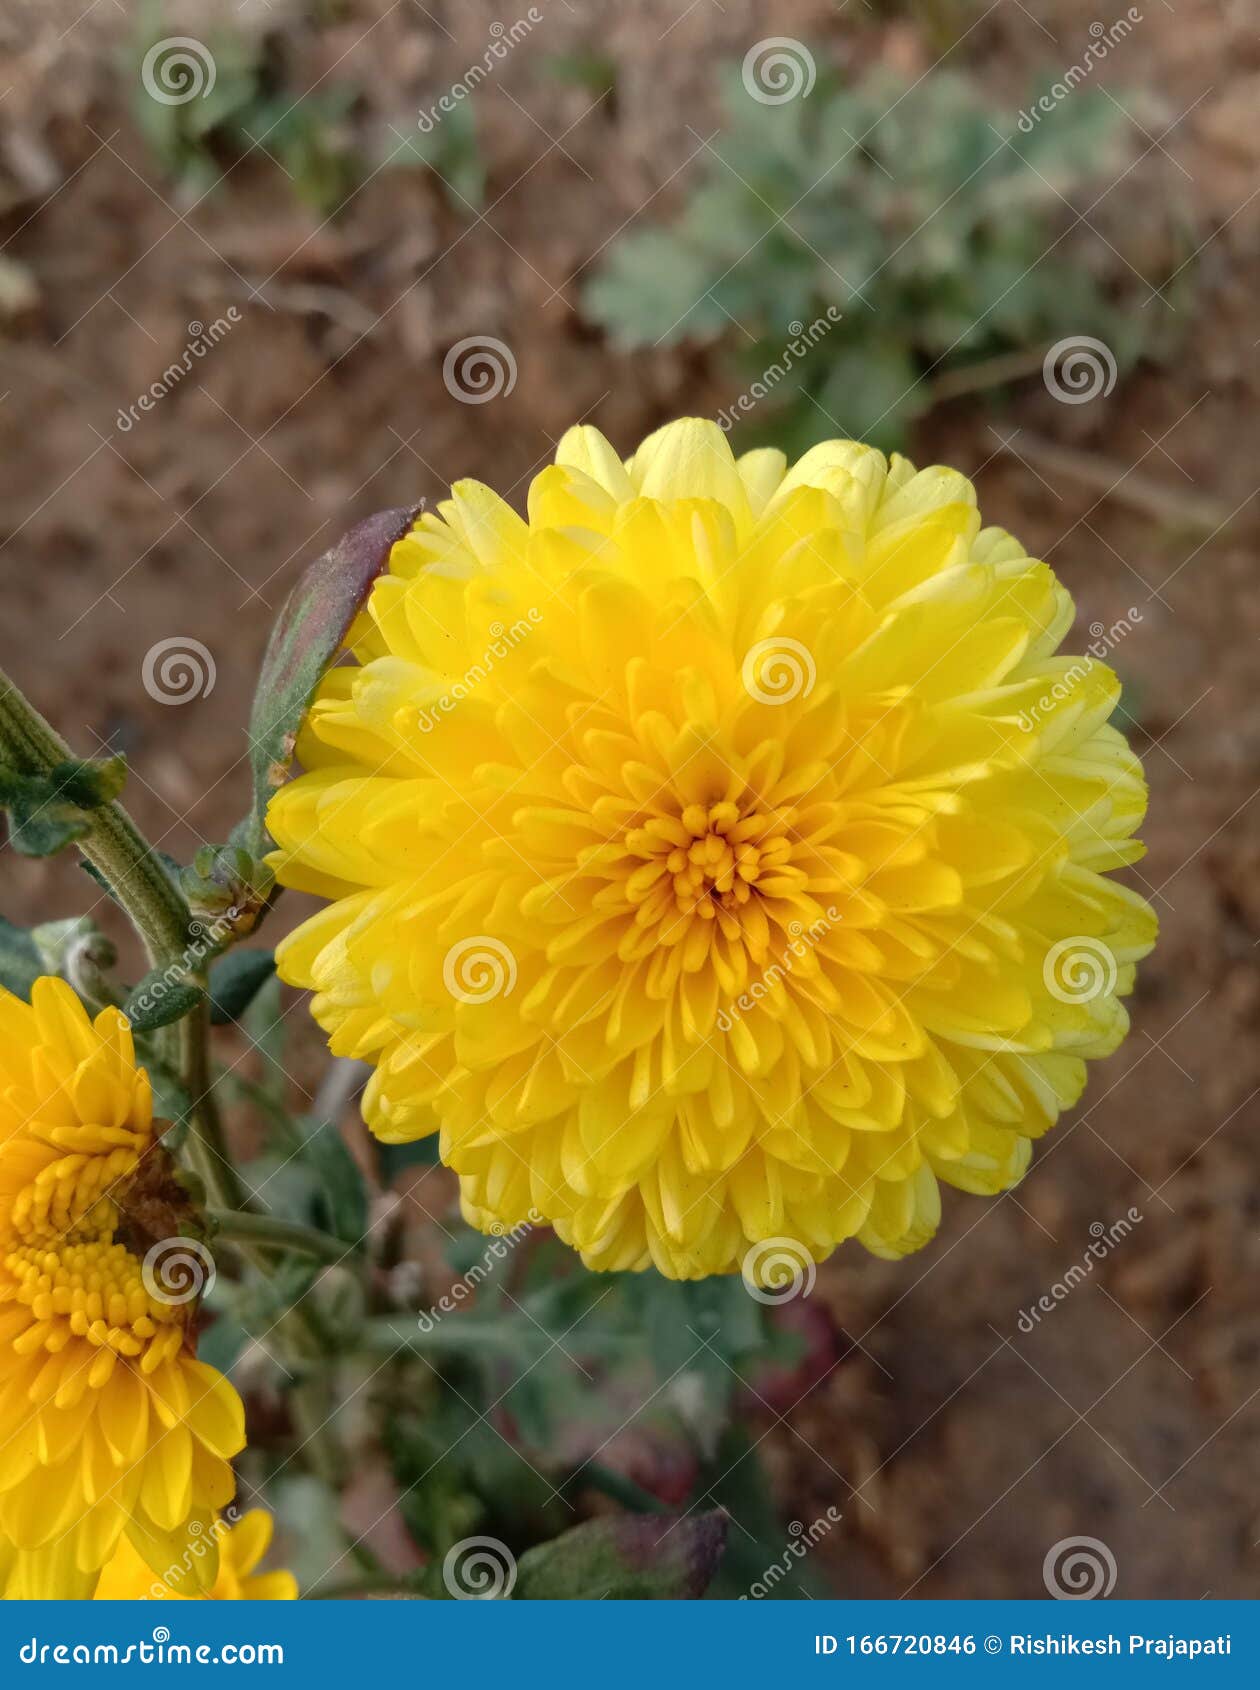 beautiful yellow flower garden image